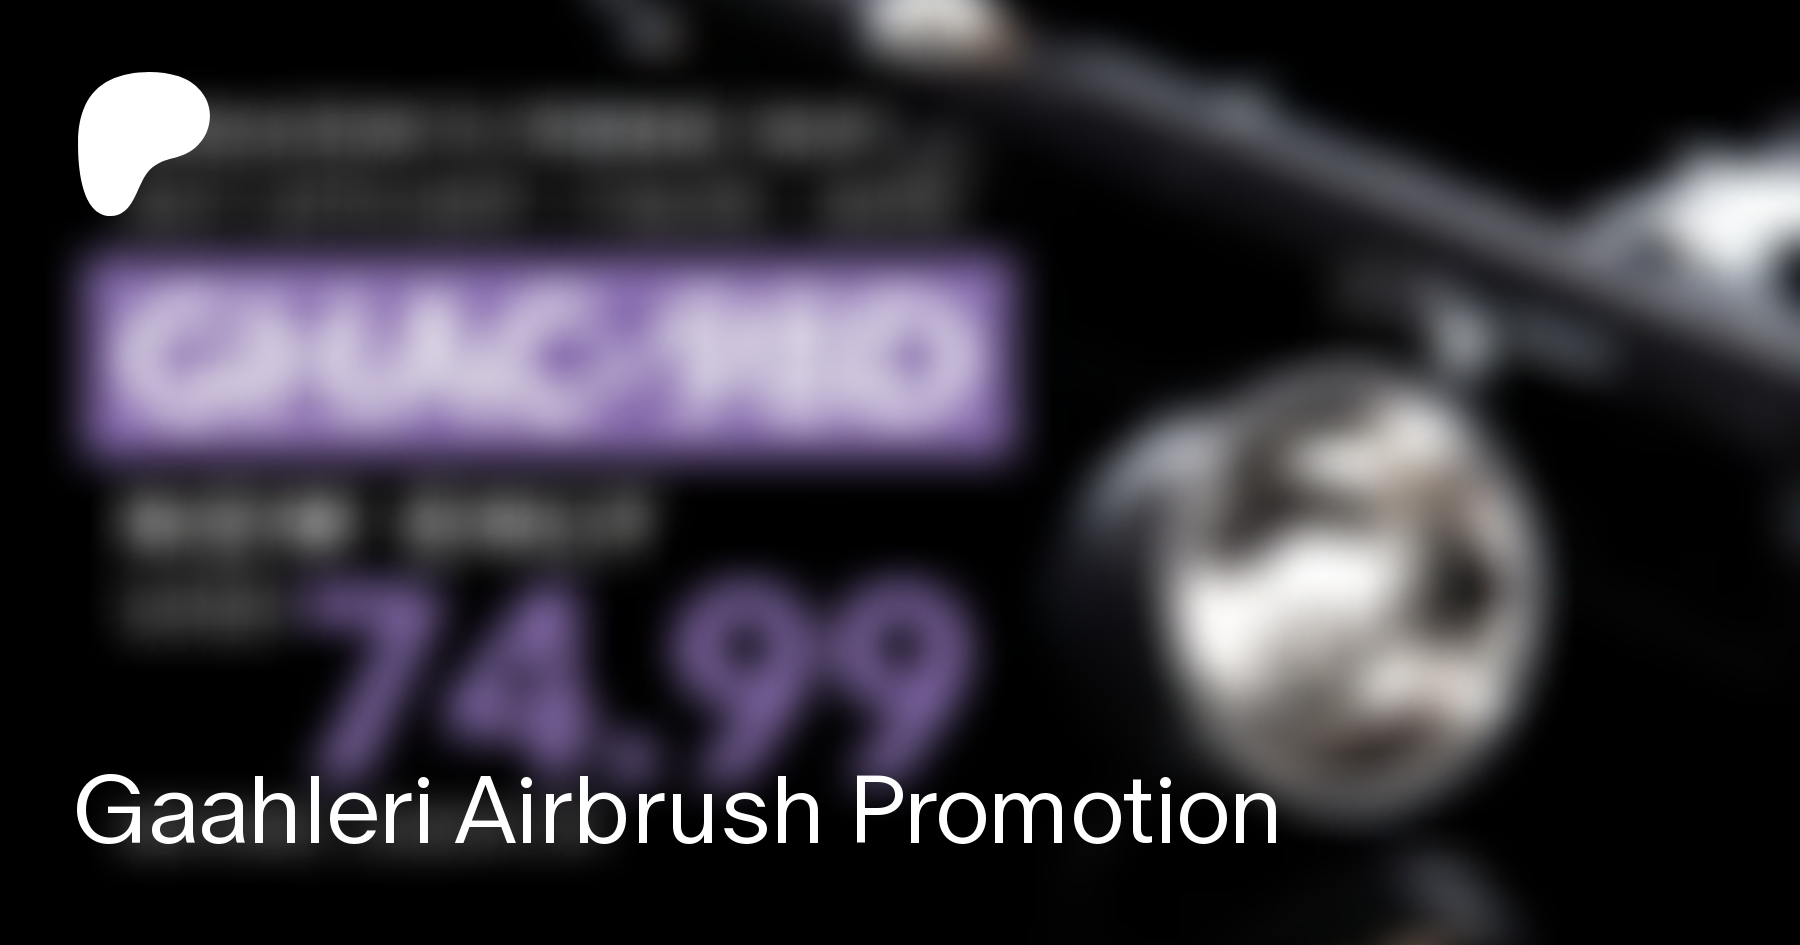 Gaahleri Airbrush Promotion